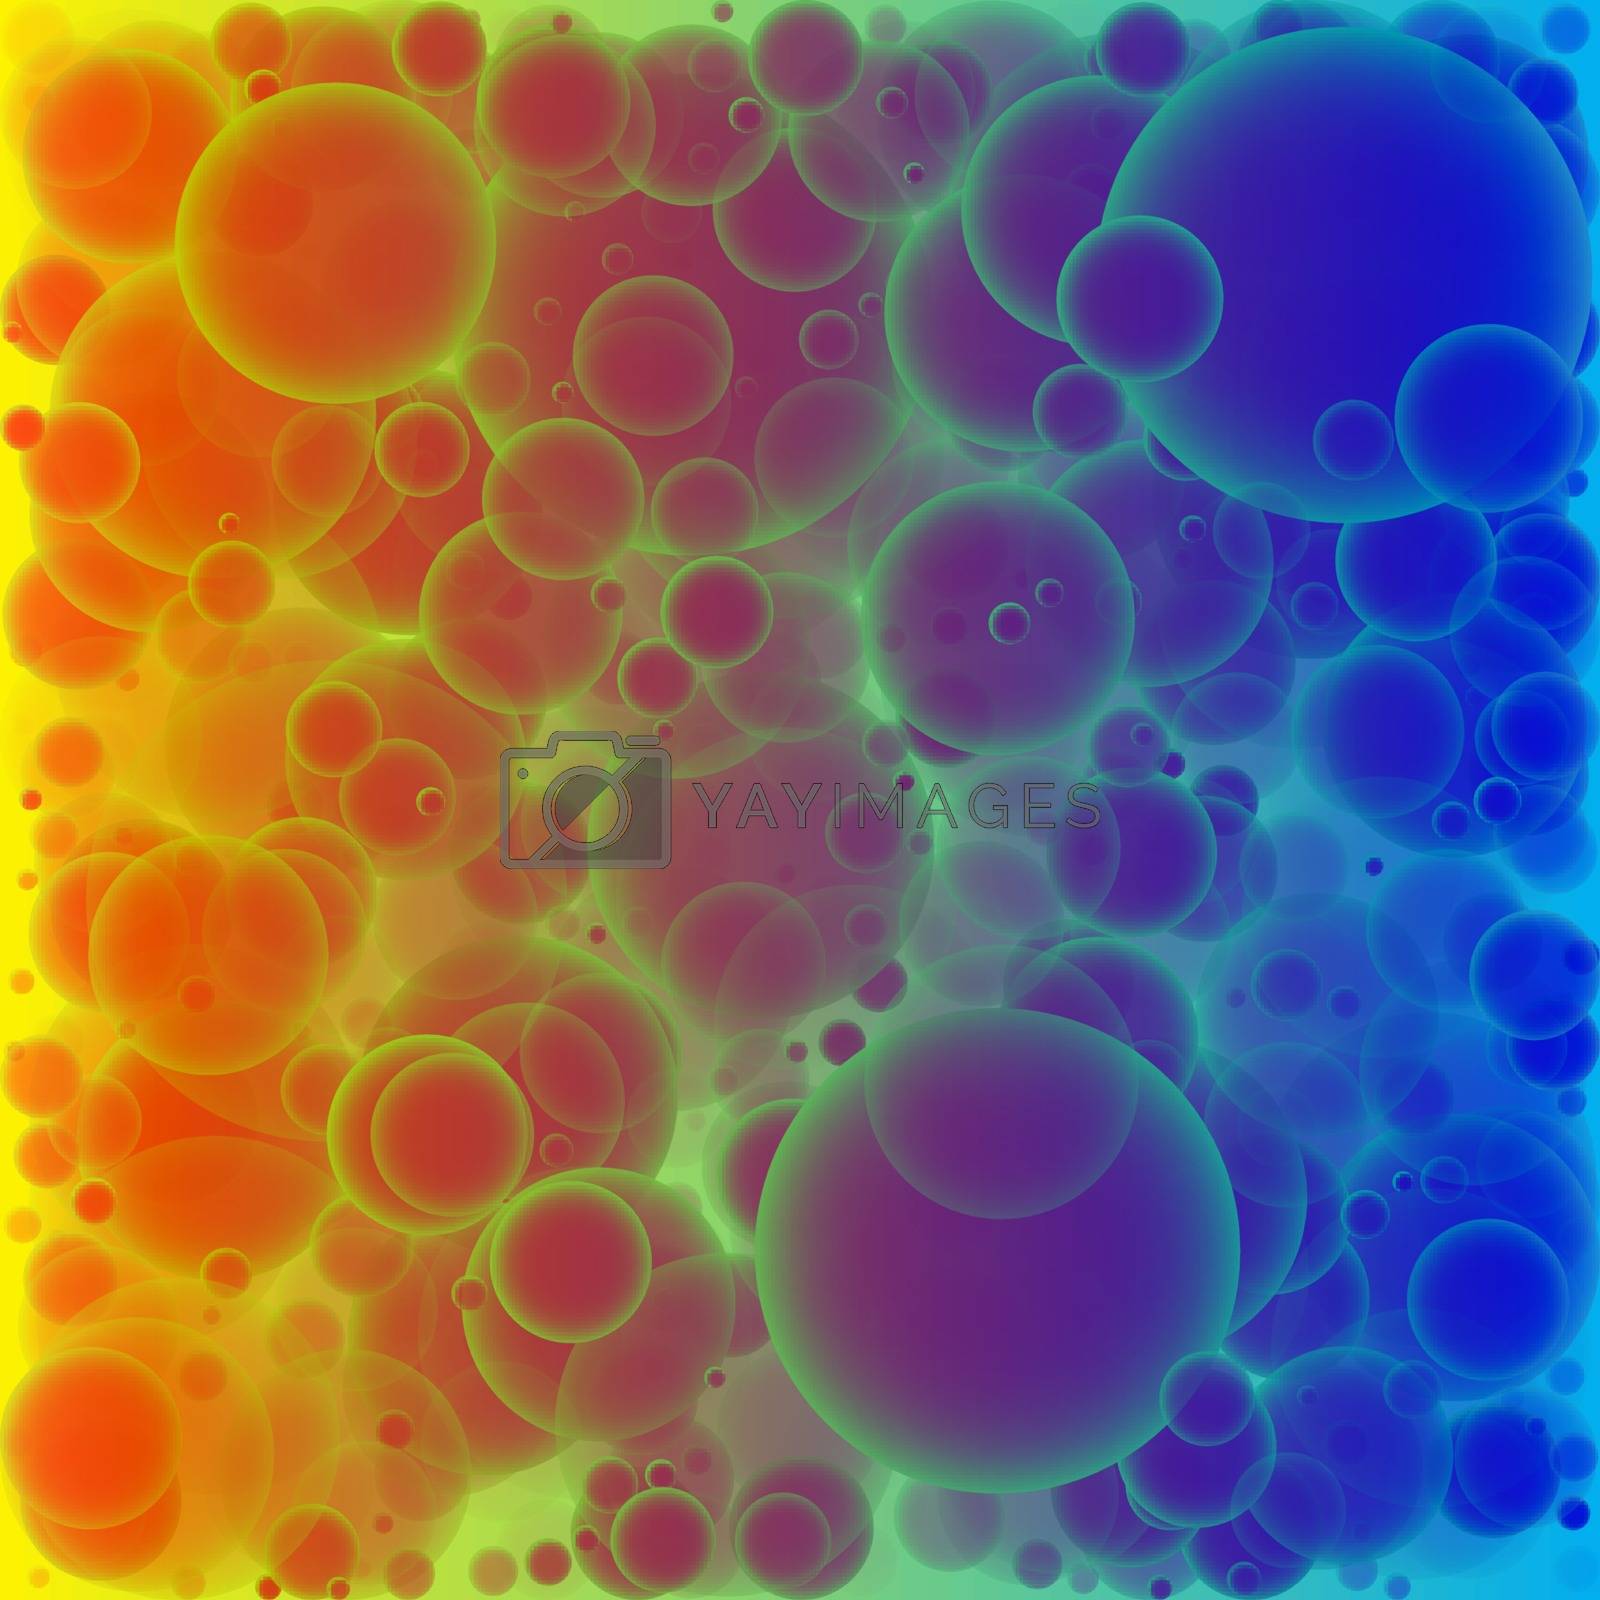 Royalty free image of abstract circle background bubble beautiful wallpaper by wektorygrafika